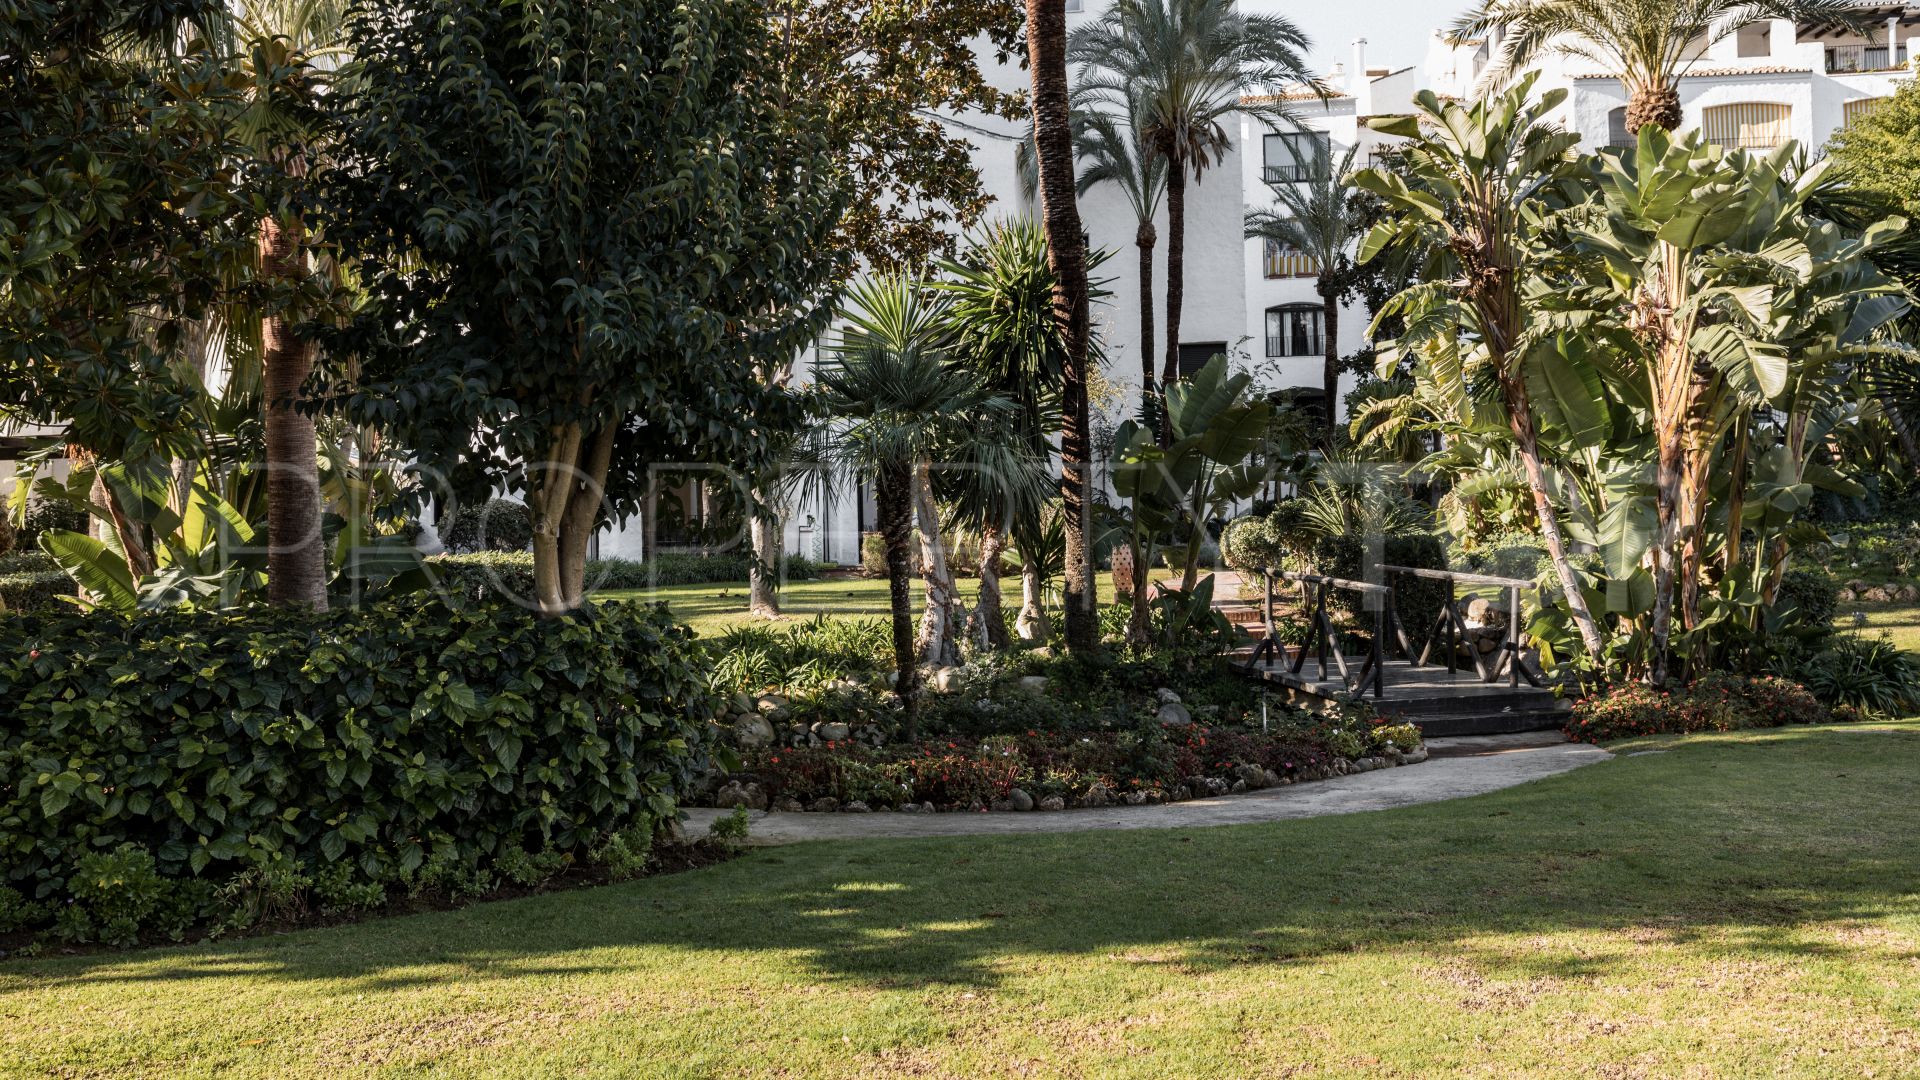 Jardines del Puerto apartment for sale